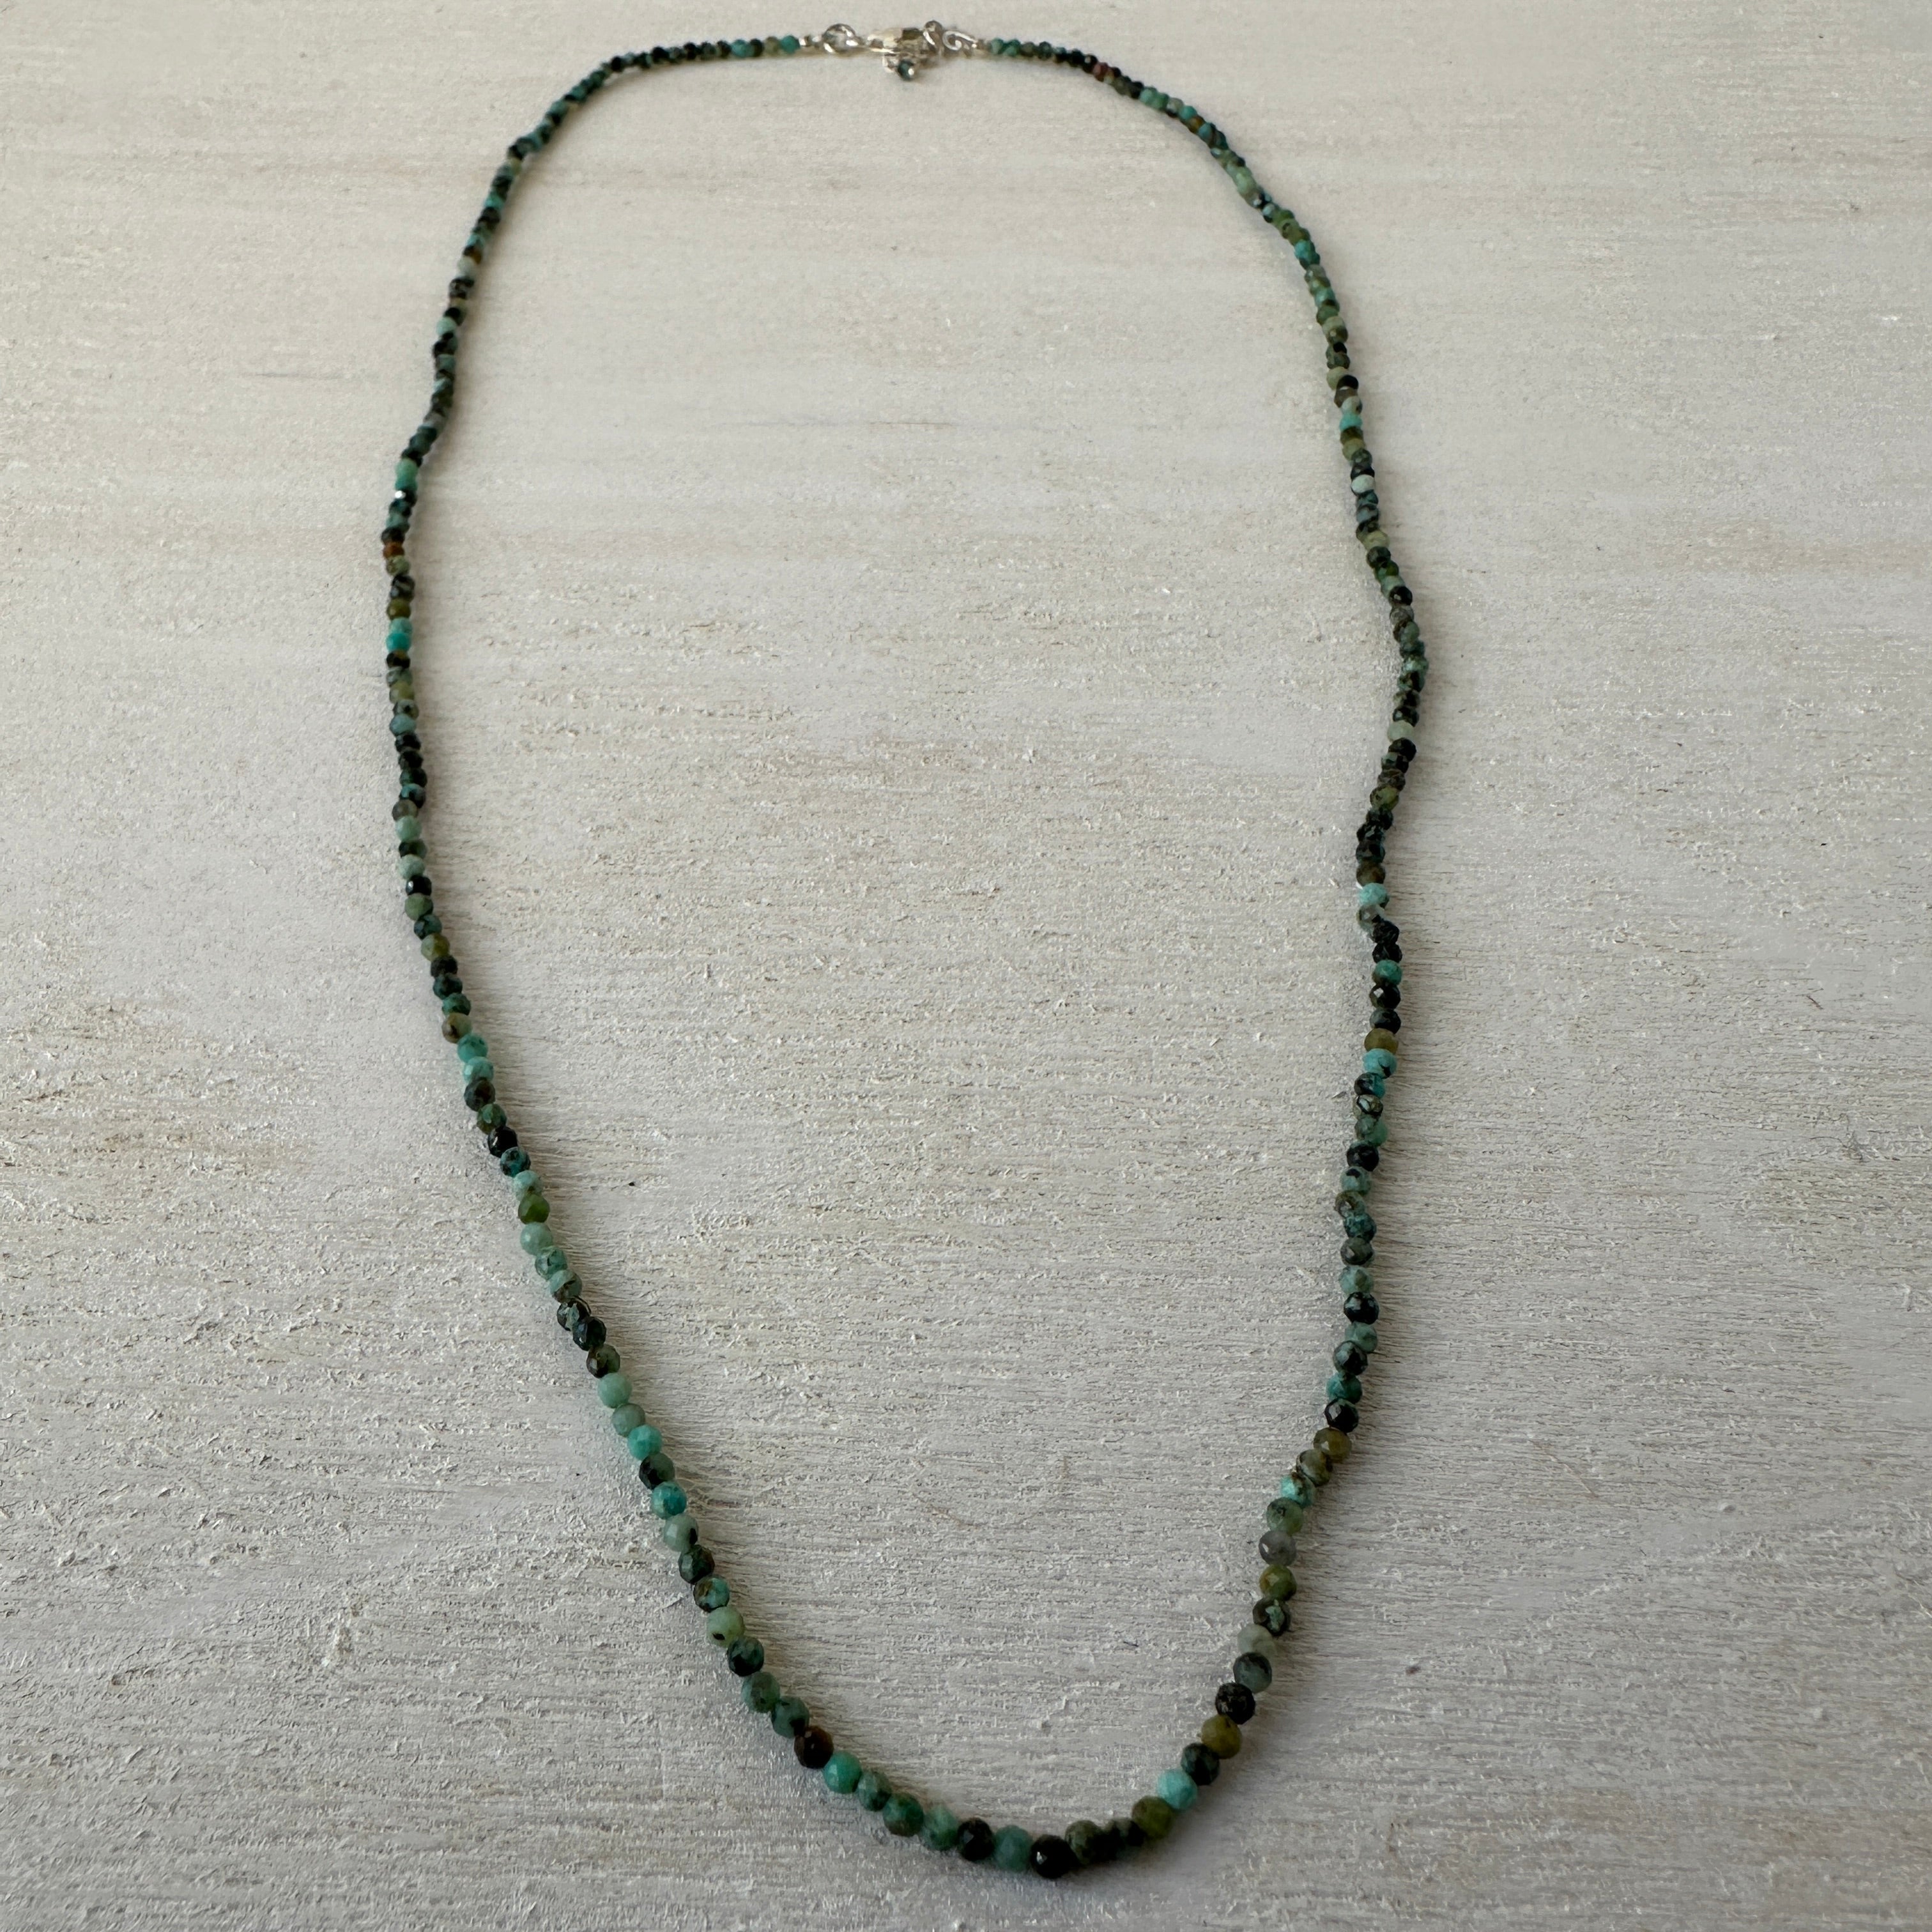 African Turquoise Gemstone Crystal Sterling Silver Necklace / Bracelet - 18"